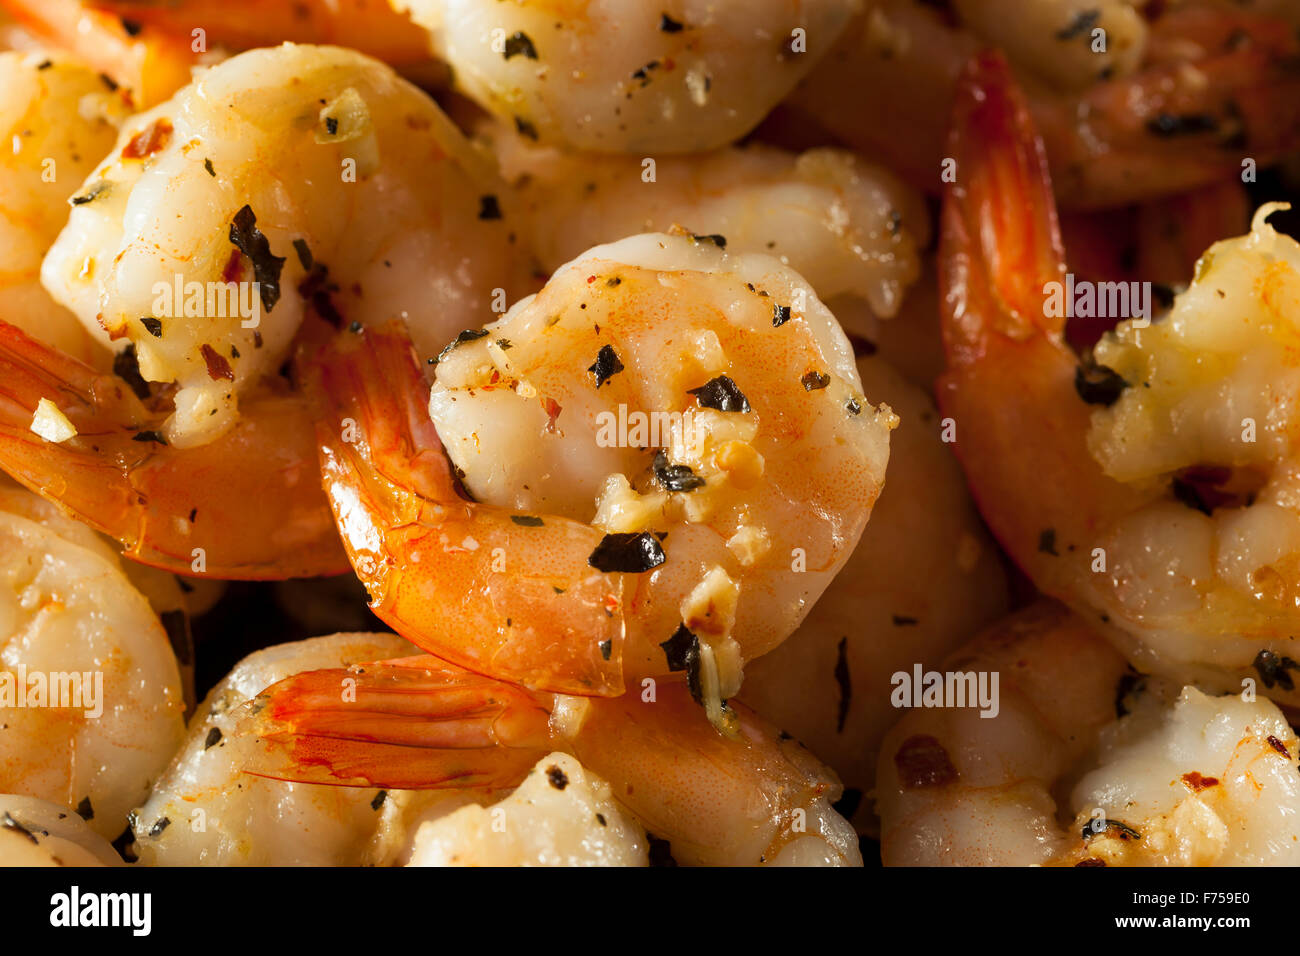 Homemade Sauteed Shrimp with Herbs and Garlic Stock Photo - Alamy